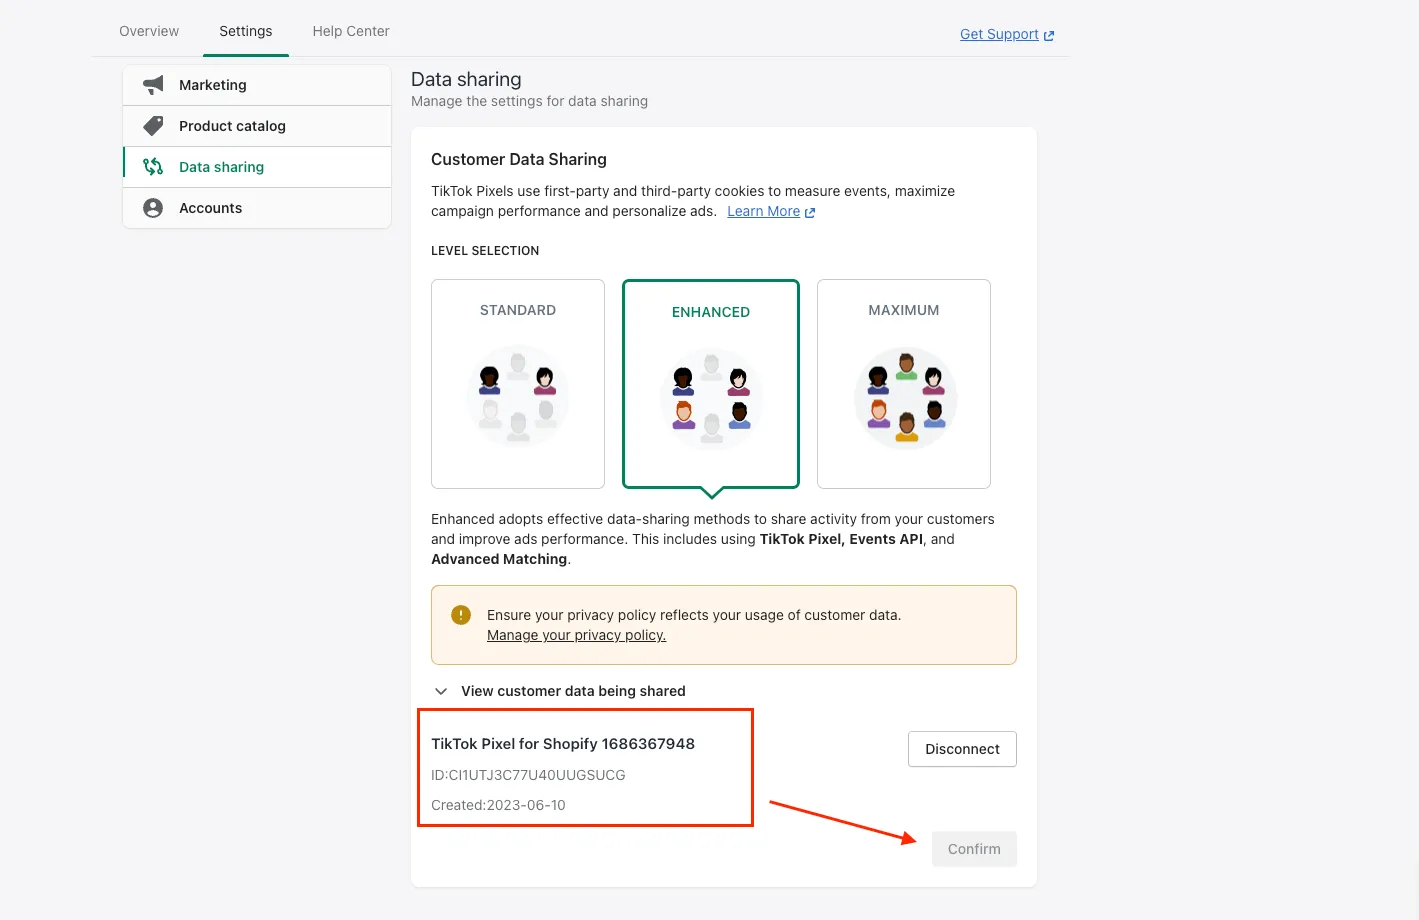 Confirm TikTok Customer Data Sharing on Shopify